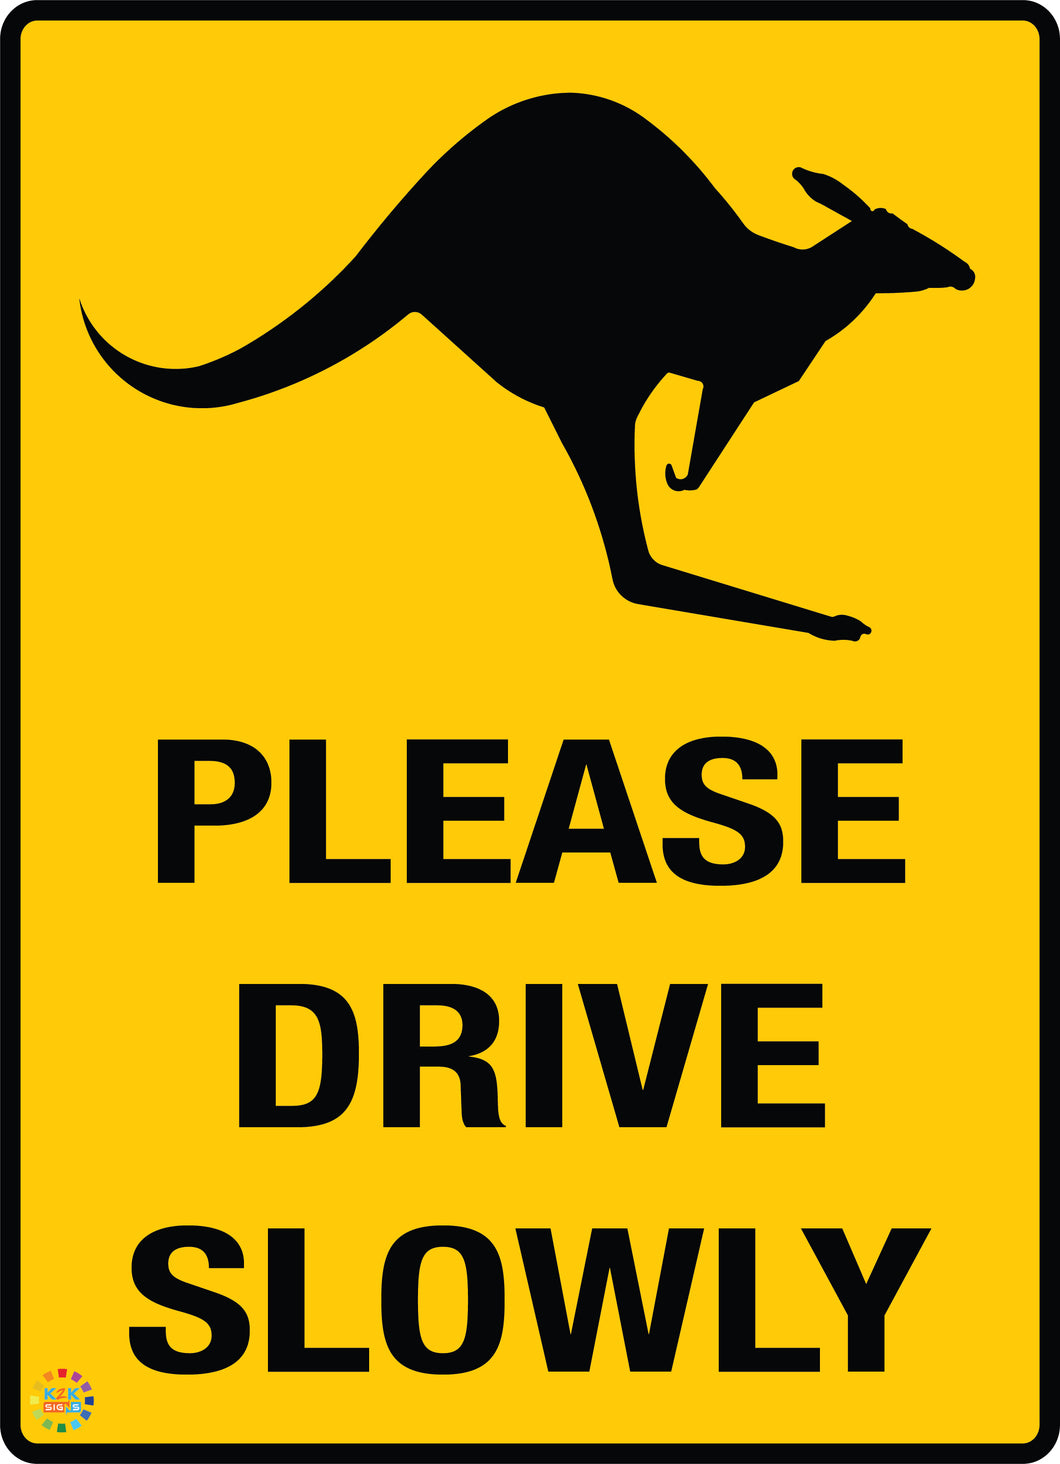 Please Drive Slowly - Kangaroos